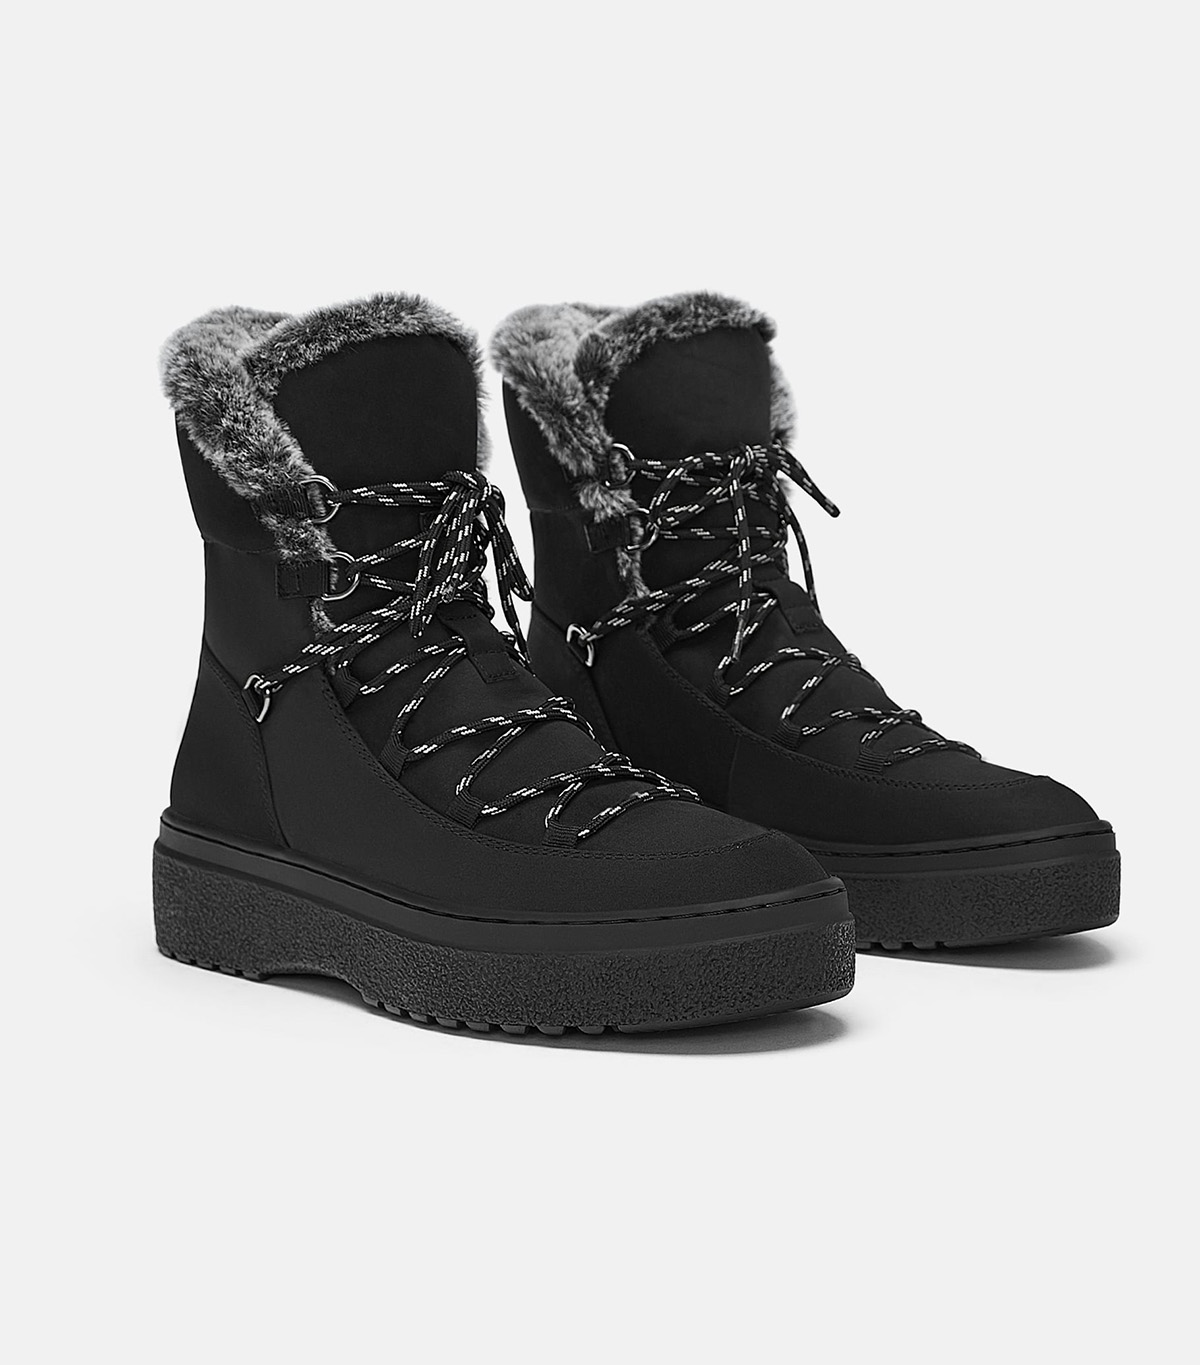 zara winter boots 2018